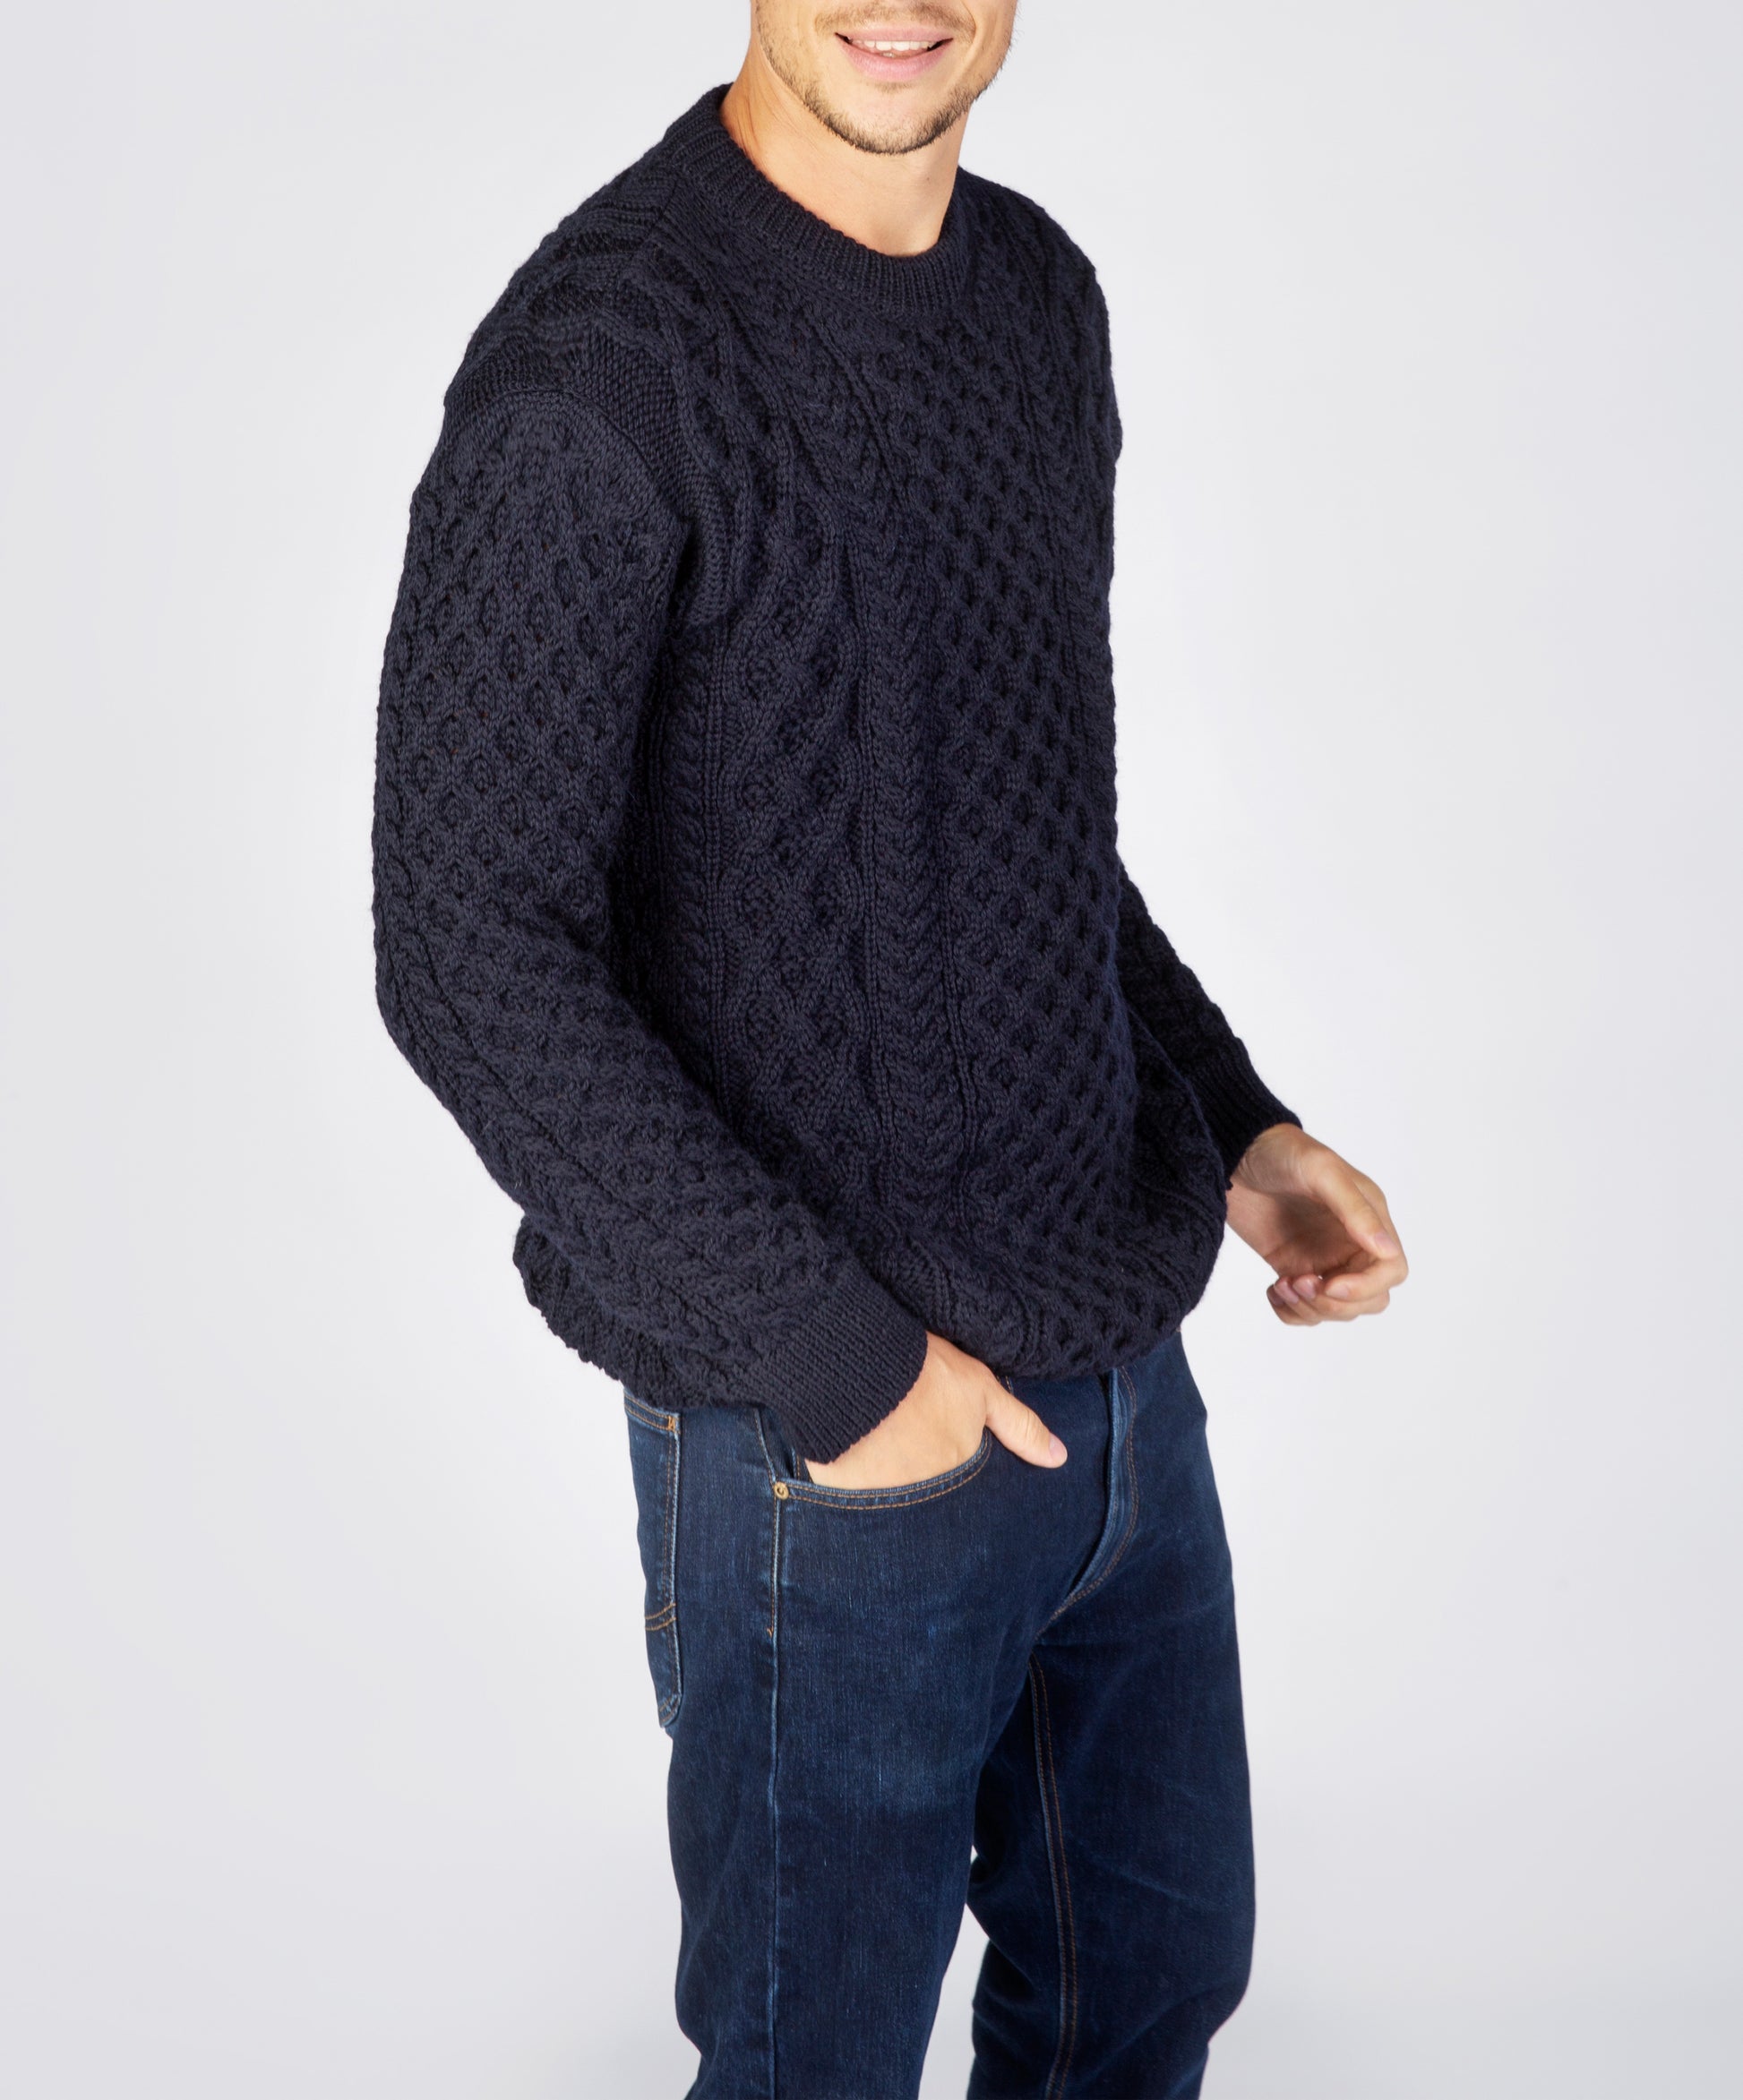 IrelandsEye Knitwear Blasket Honeycomb Stitch Mens Aran Sweater Navy